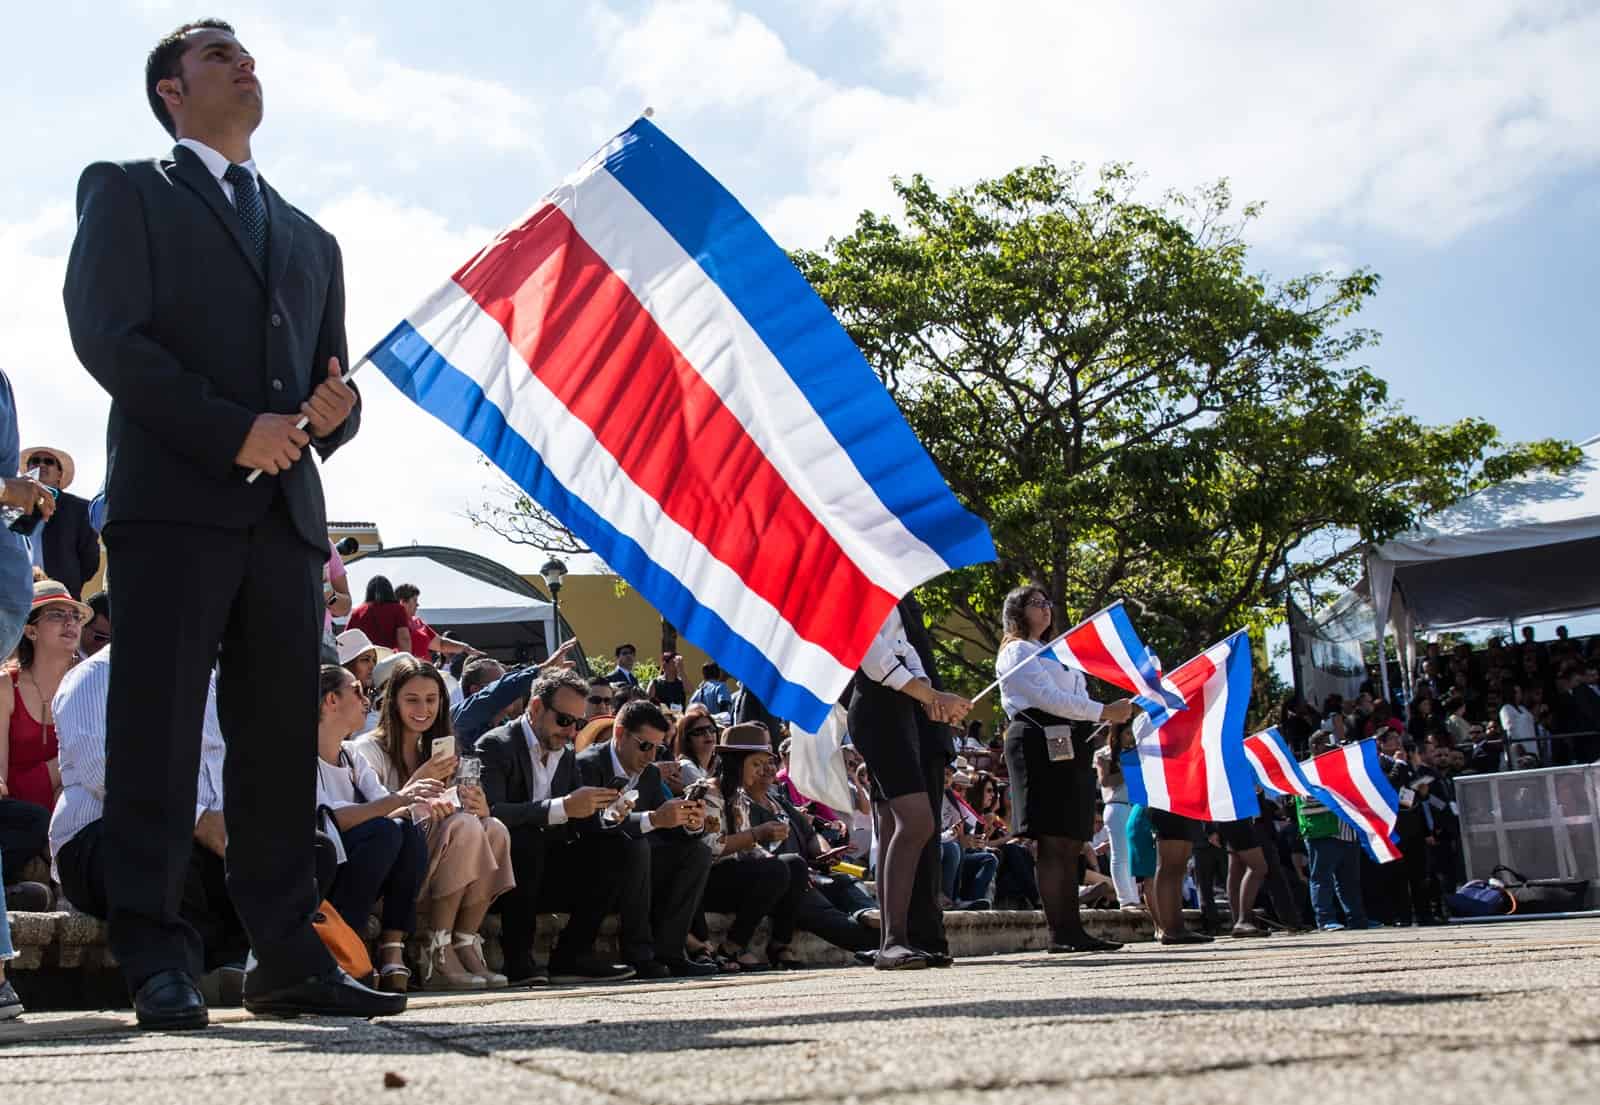 The inauguration of Costa Rica's 48th president, Carlos Alvarado, May 18, 2018